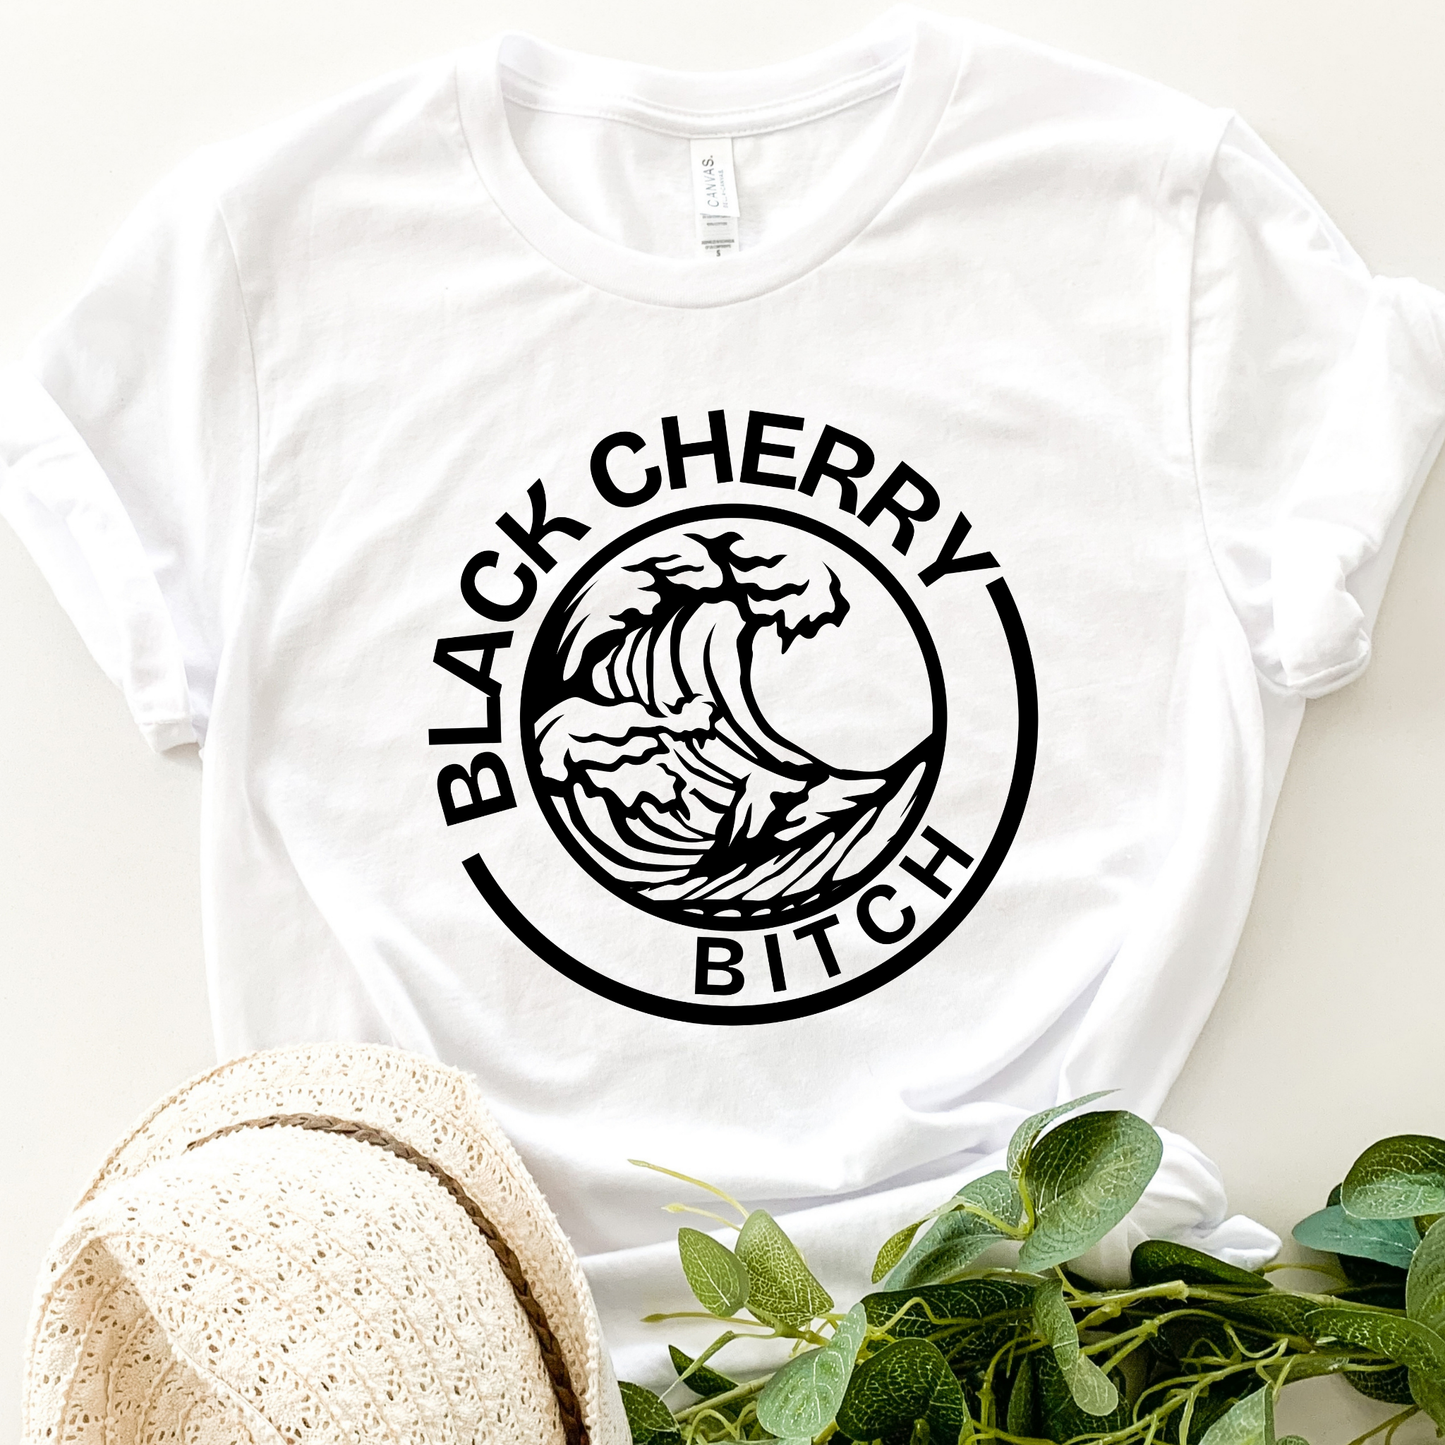 Black Cherry Bitch Short Sleeve Essential T Shirt